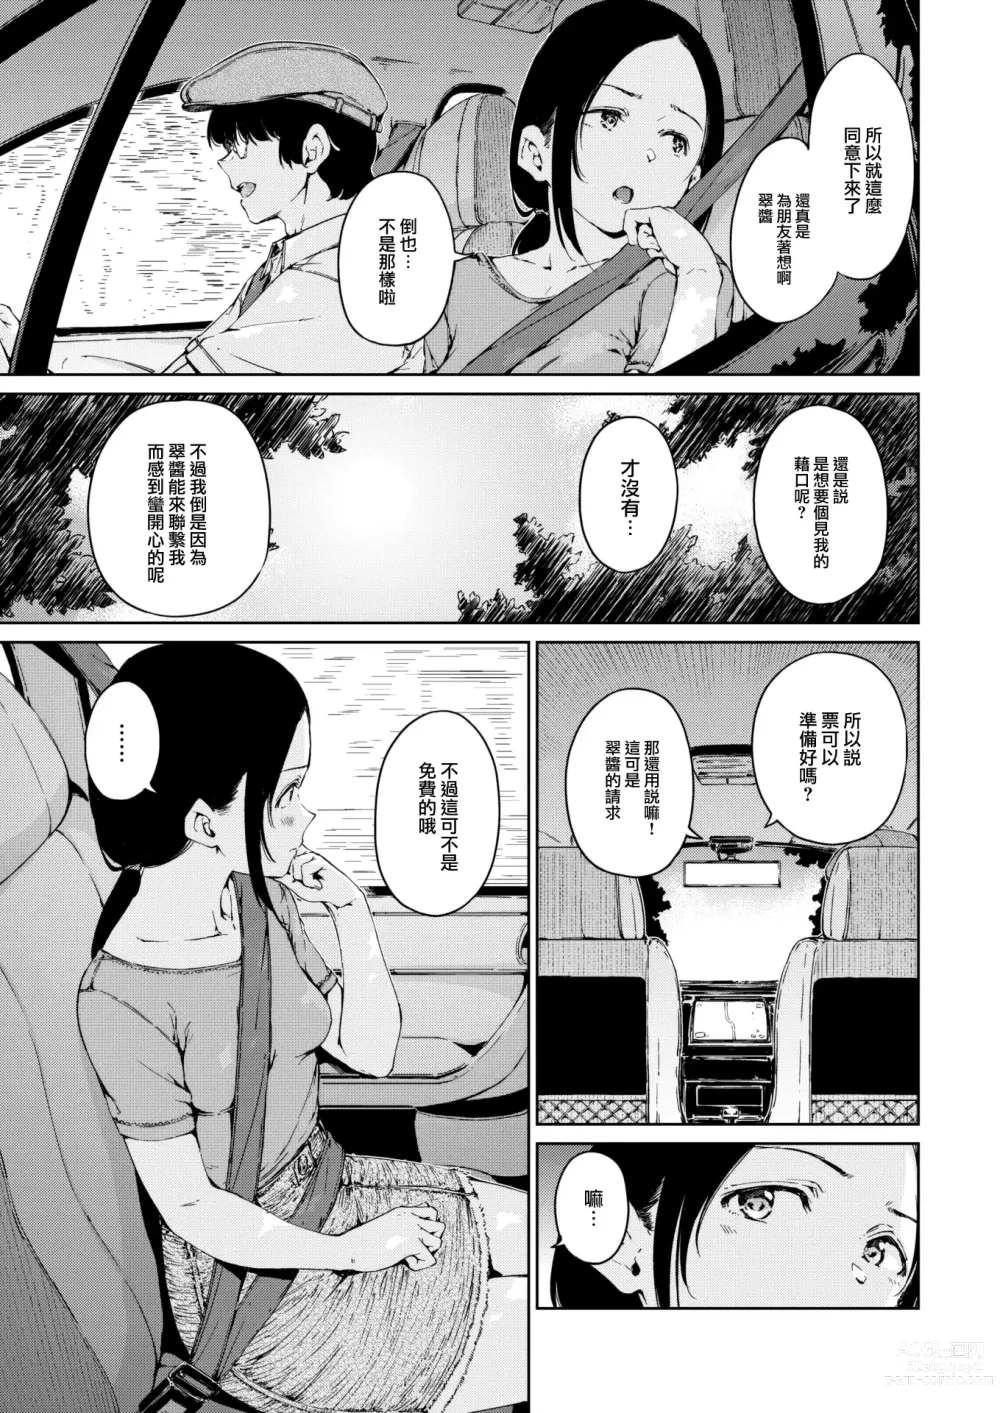 Page 4 of manga Vanilla Ice